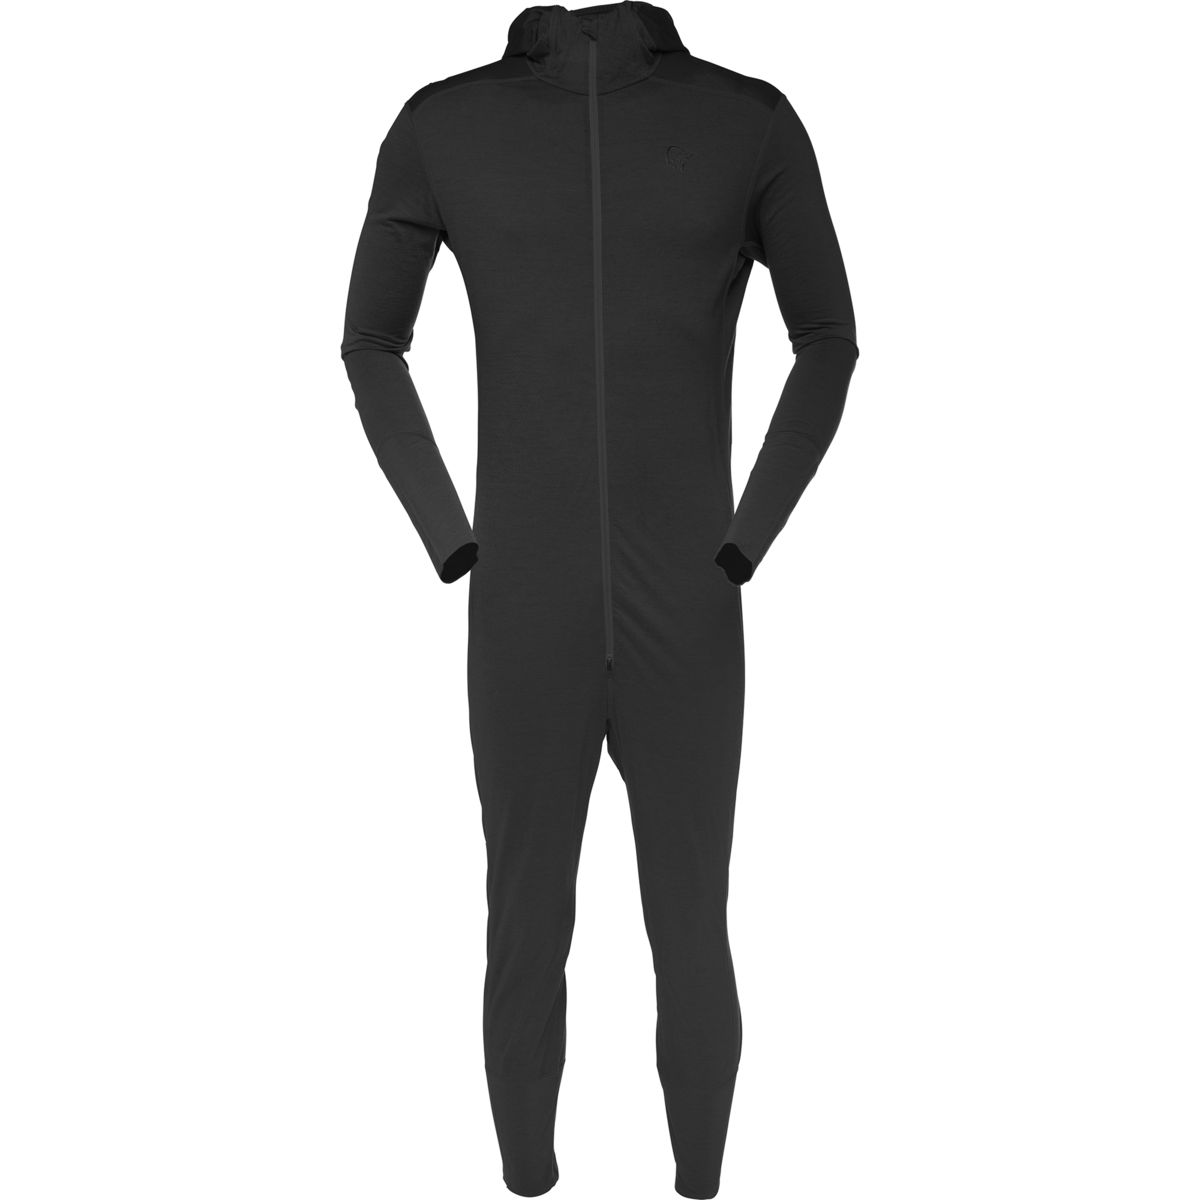 Base layer white jumpsuit - Thermal underwear black one piece